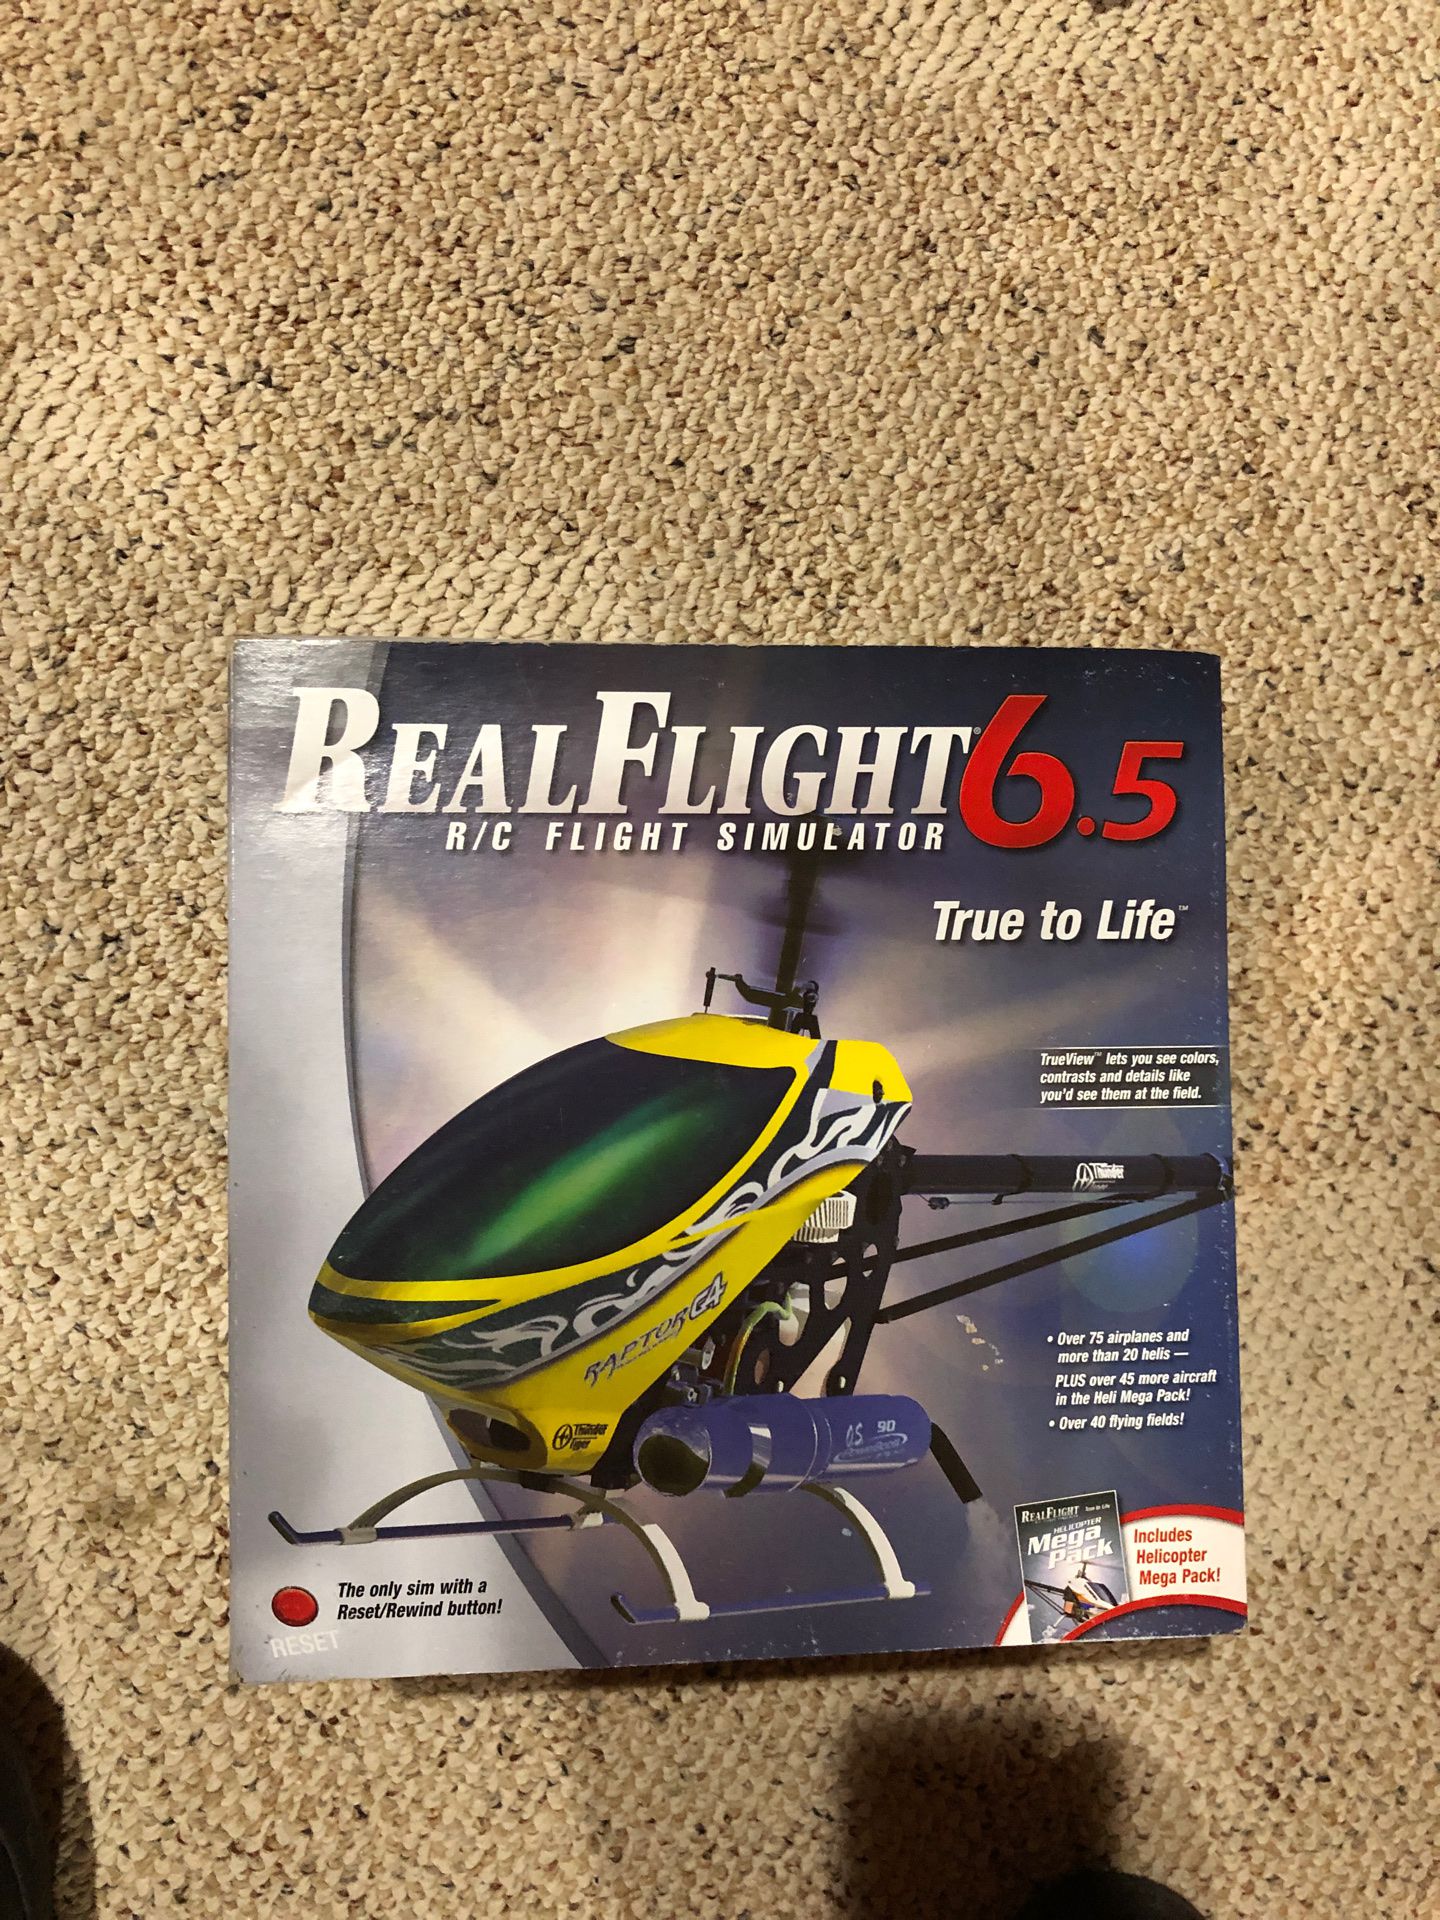 Real flight simulator 6.5